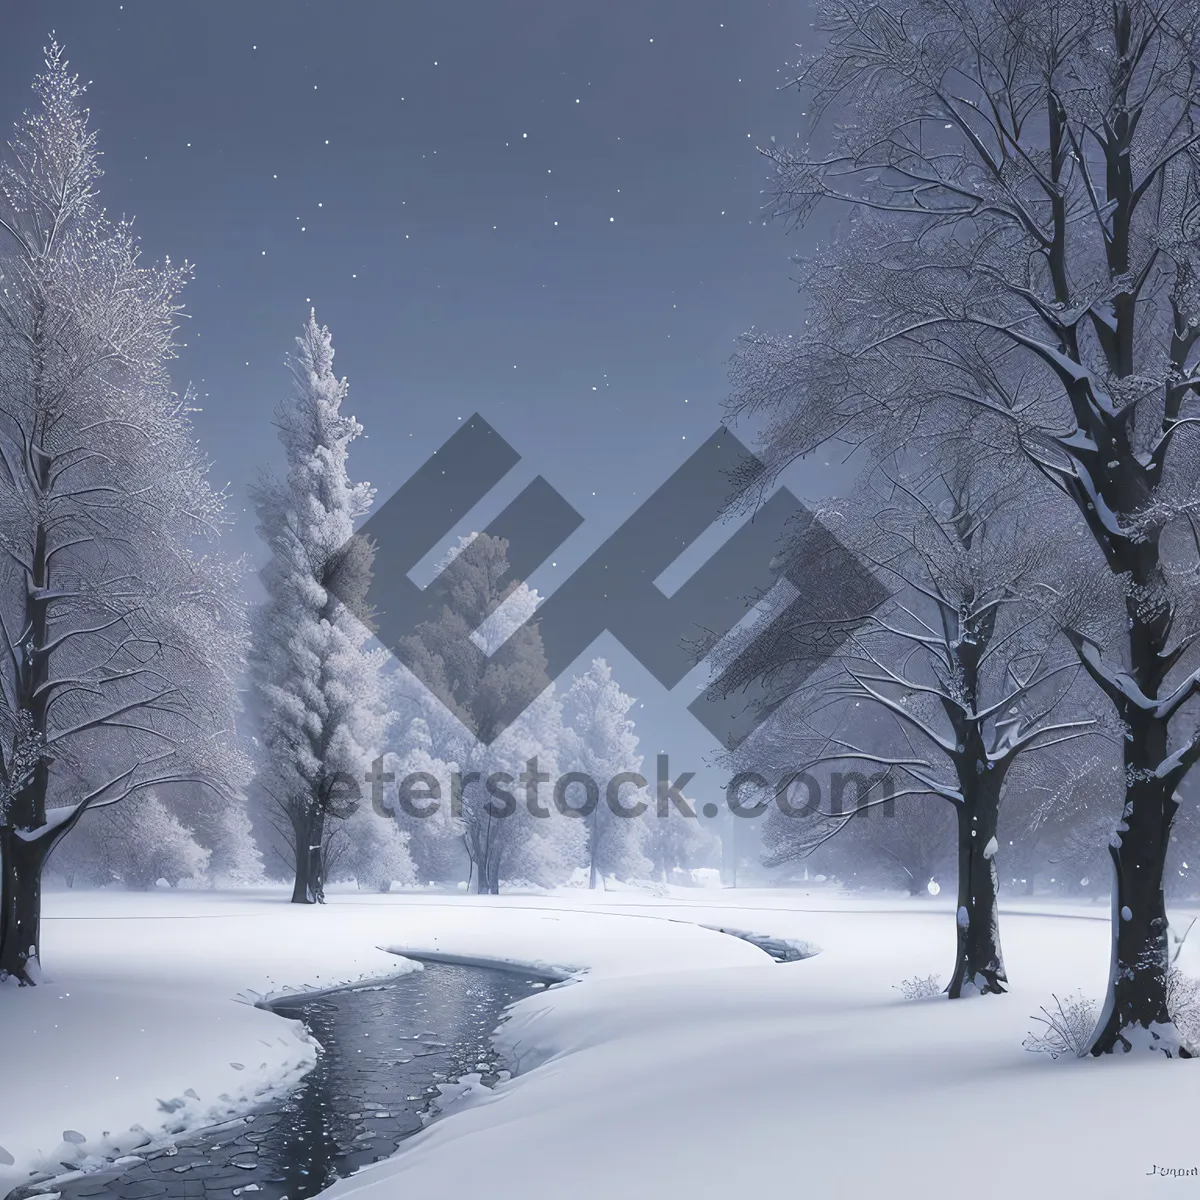 Picture of Winter Wonderland: Serene snowy road through rural forest.